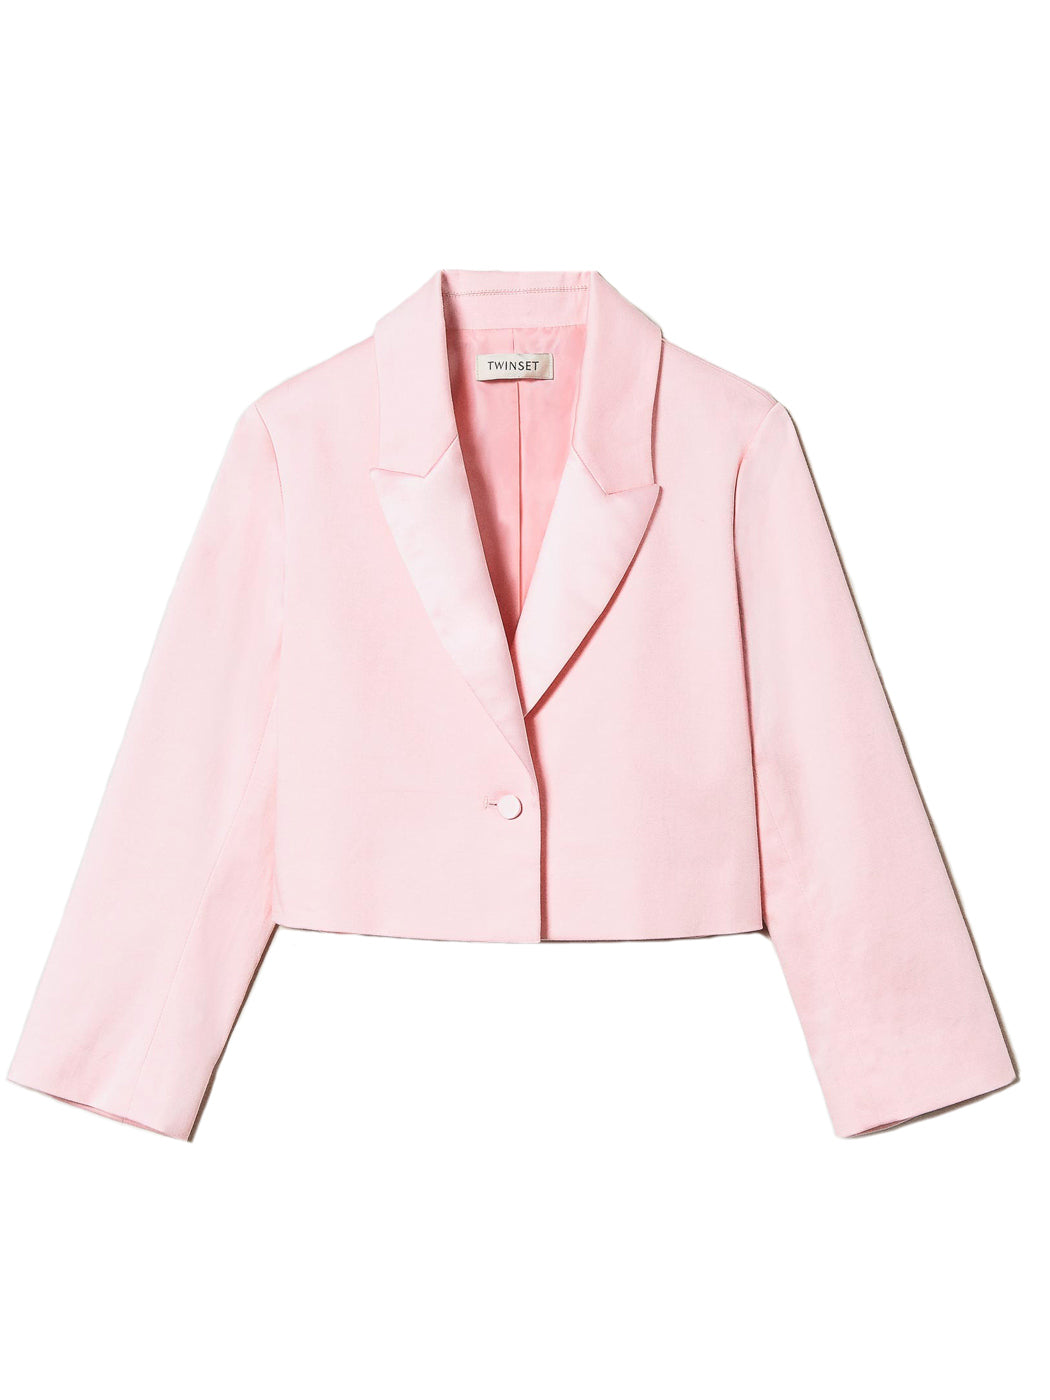 TWINSET cotton satin Spencer jacket for girl-231GJ2010 Pink